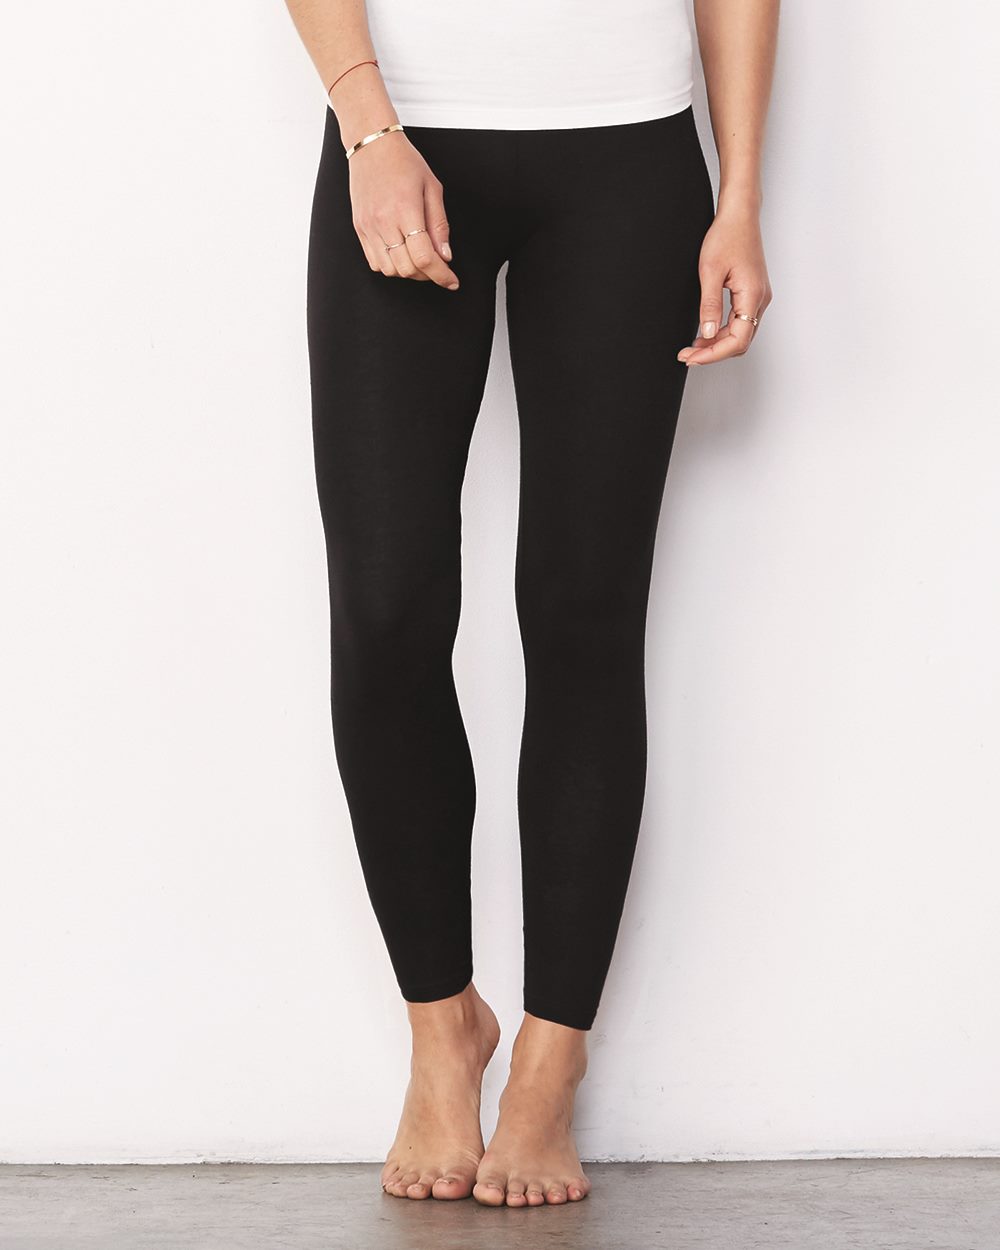 Hanes Women's Cotton Spandex Leggings Size M Gray  Cotton spandex leggings,  Spandex leggings, Cotton spandex